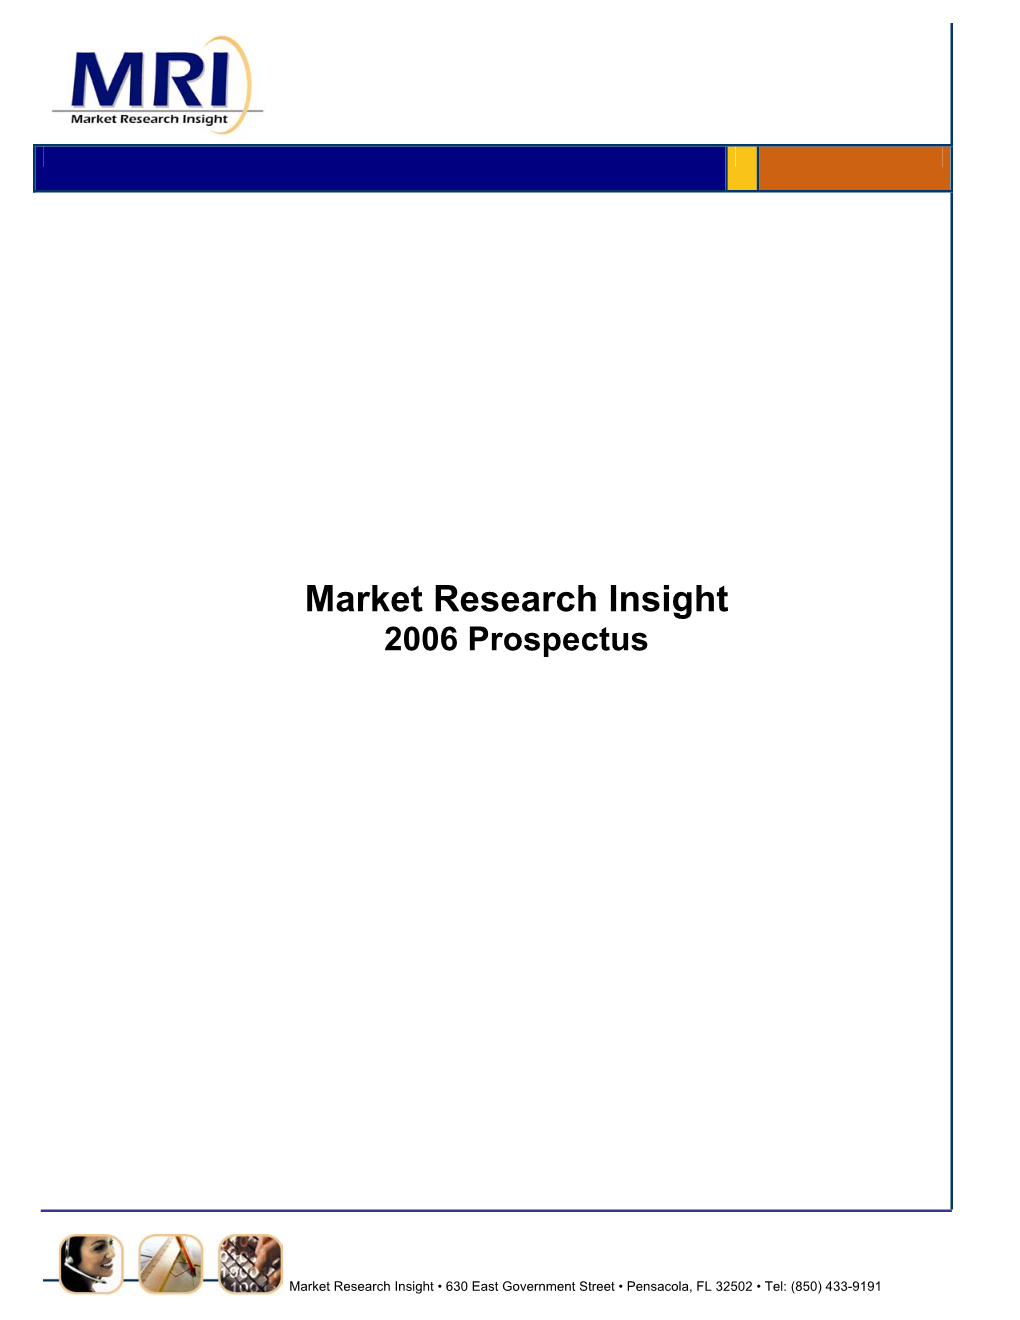 Market Research Insight 2006 Prospectus